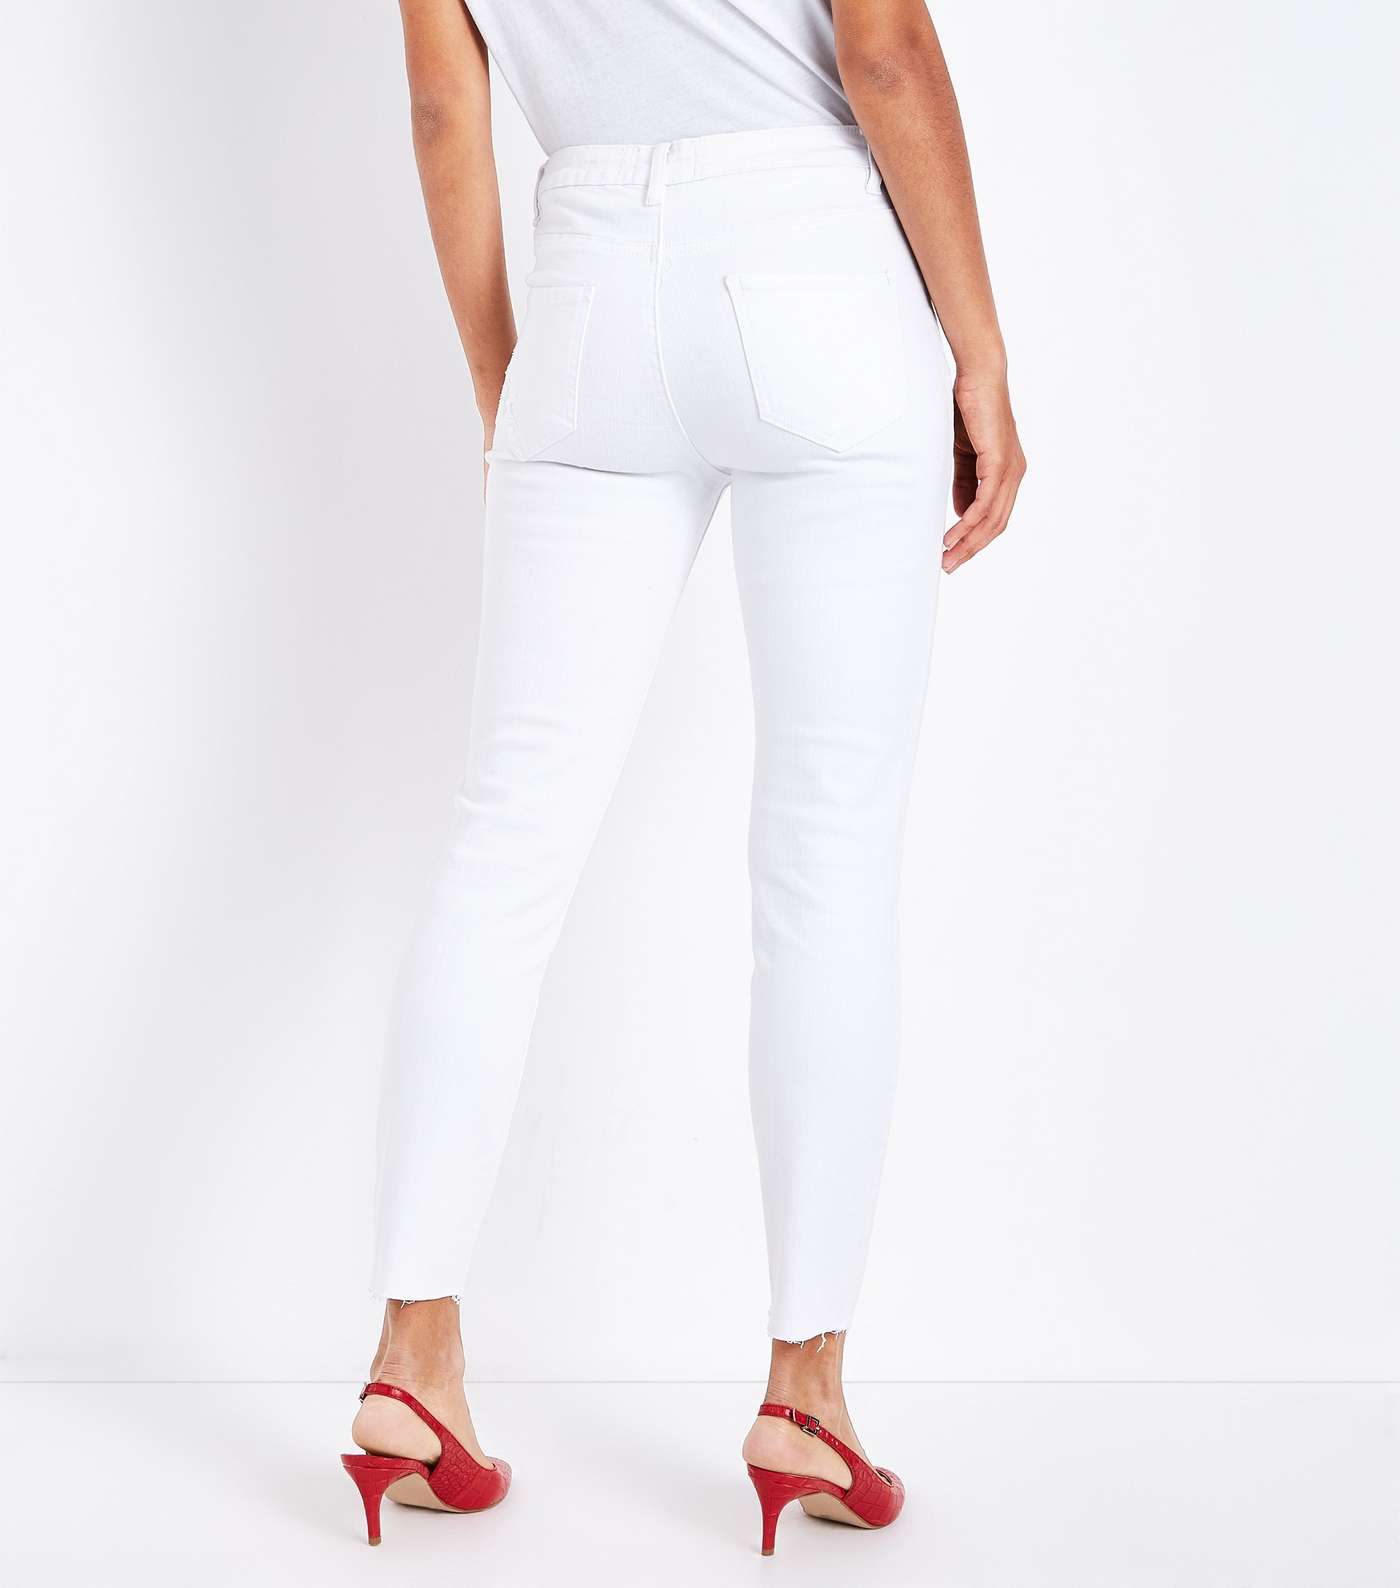 White Ripped Skinny Jenna Jeans Image 3